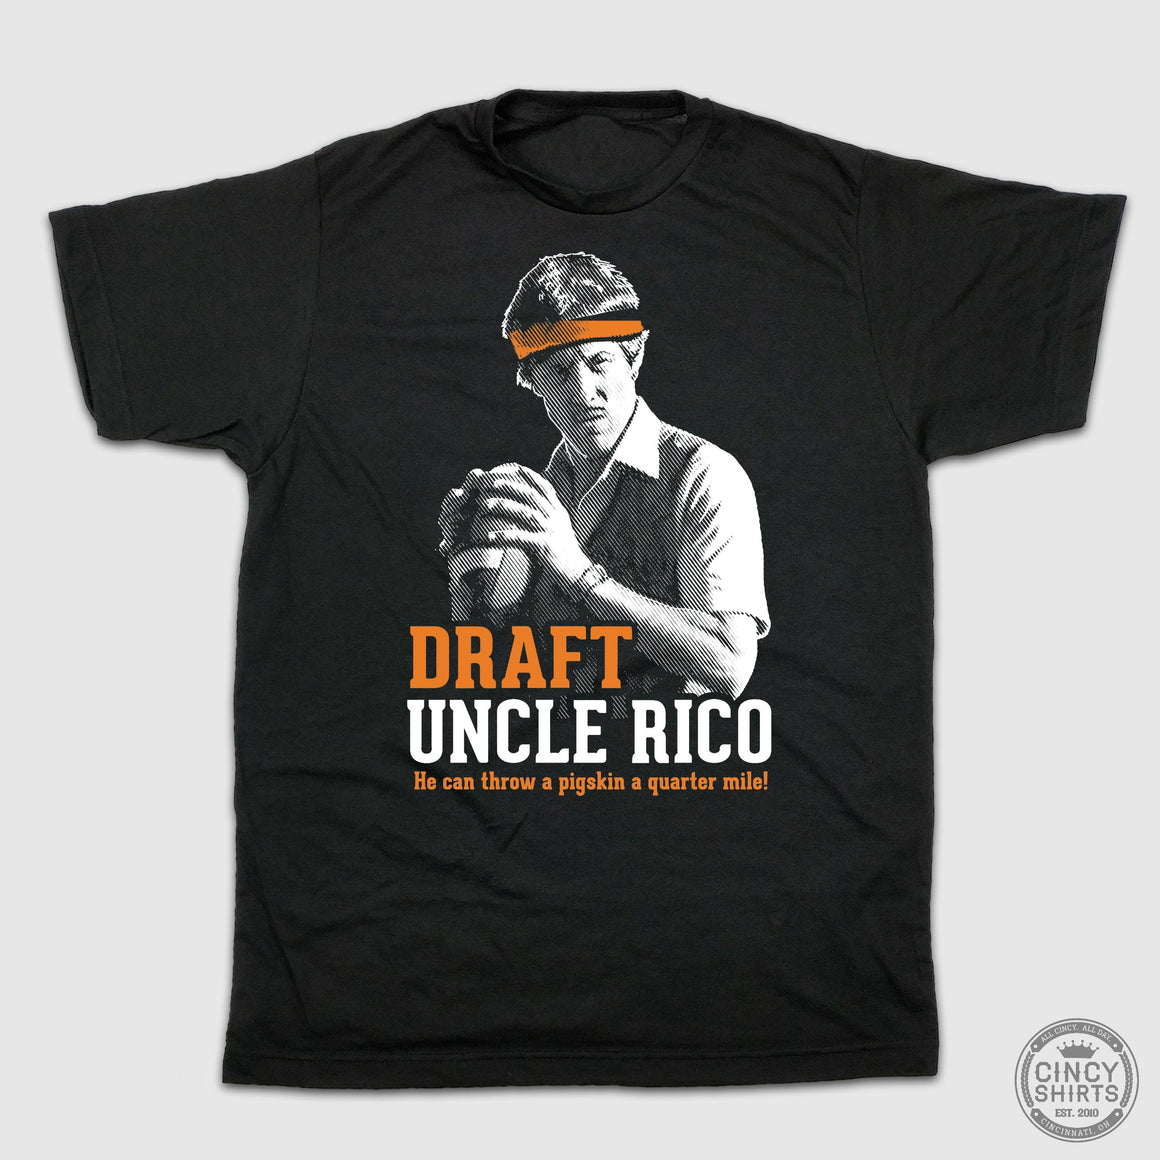 Draft Uncle Rico - Cincy Shirts